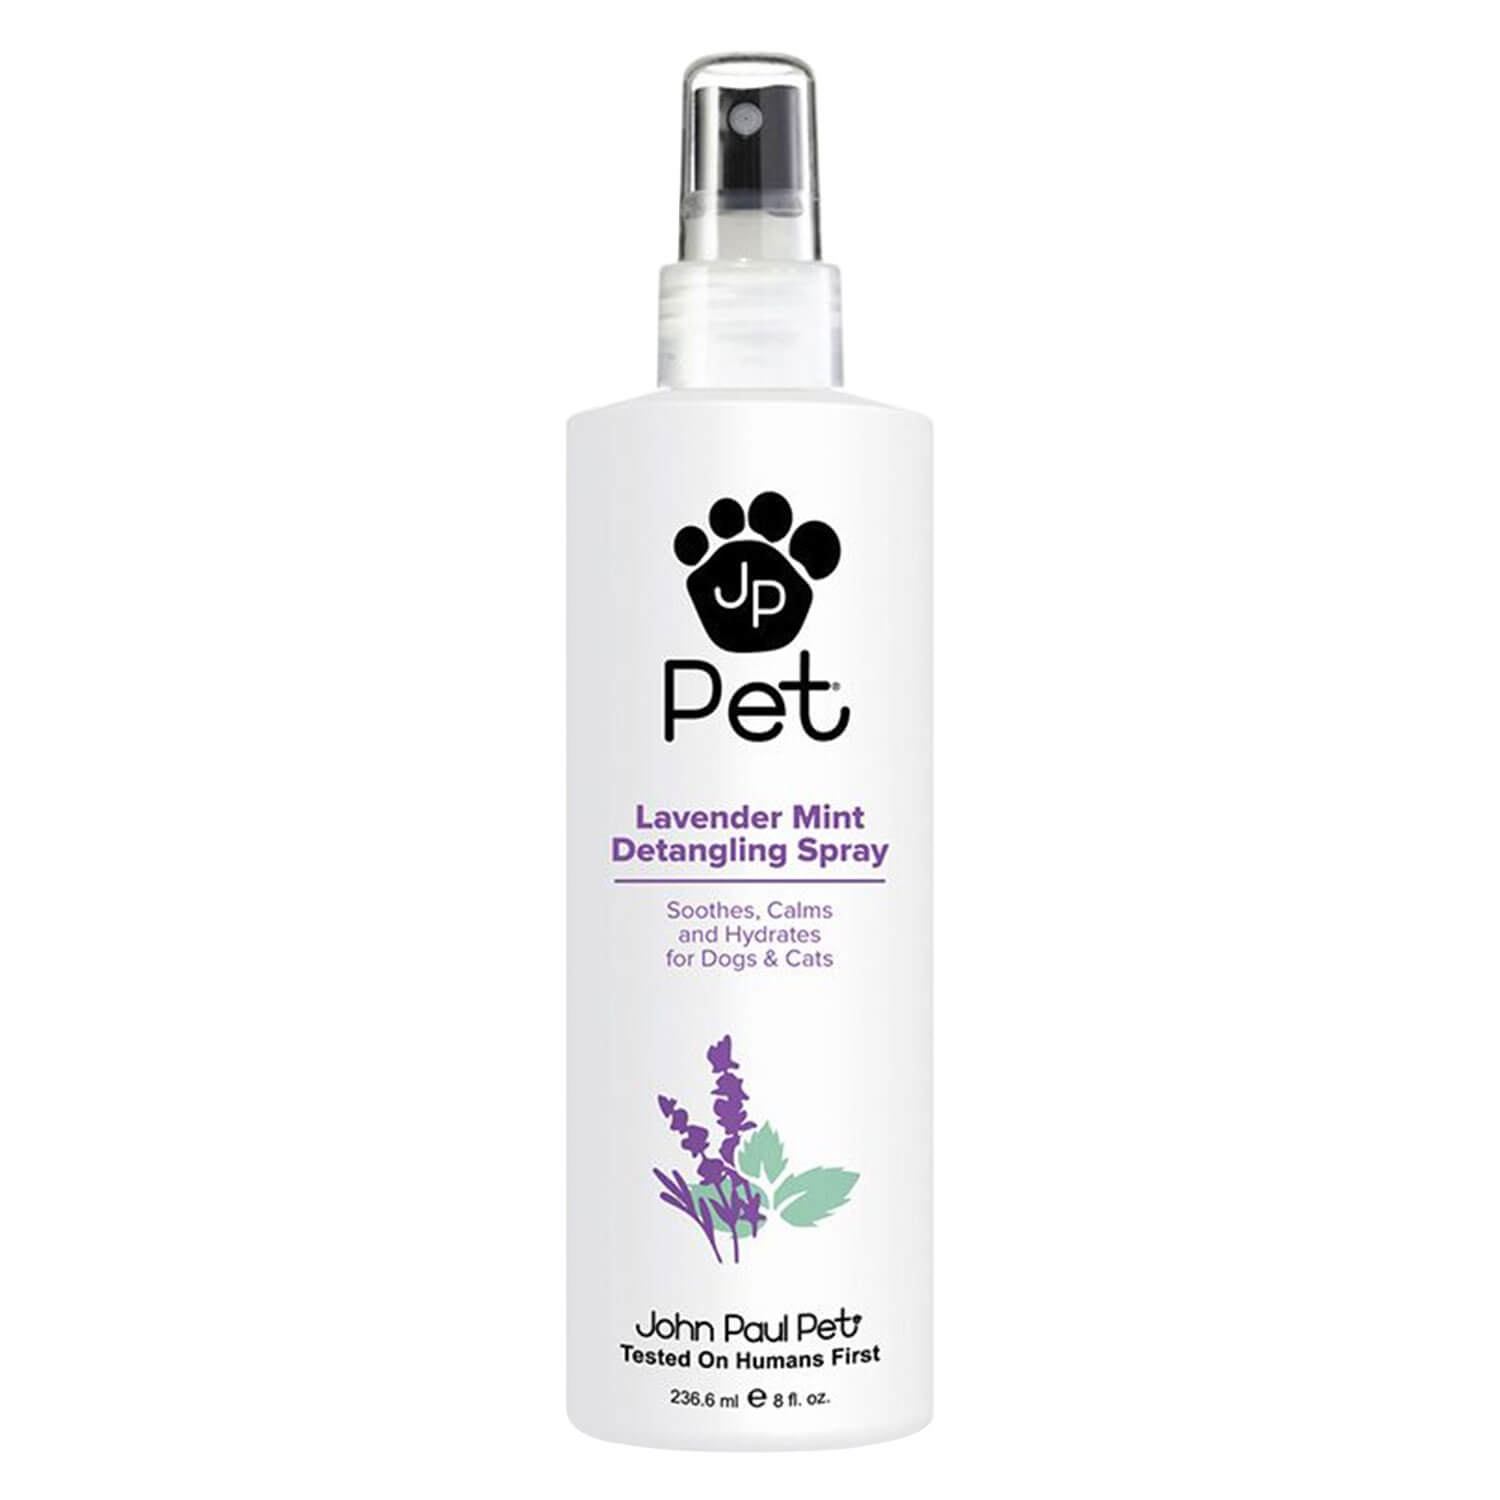 Produktbild von JP Pet - Lavender Mint Detangling Spray